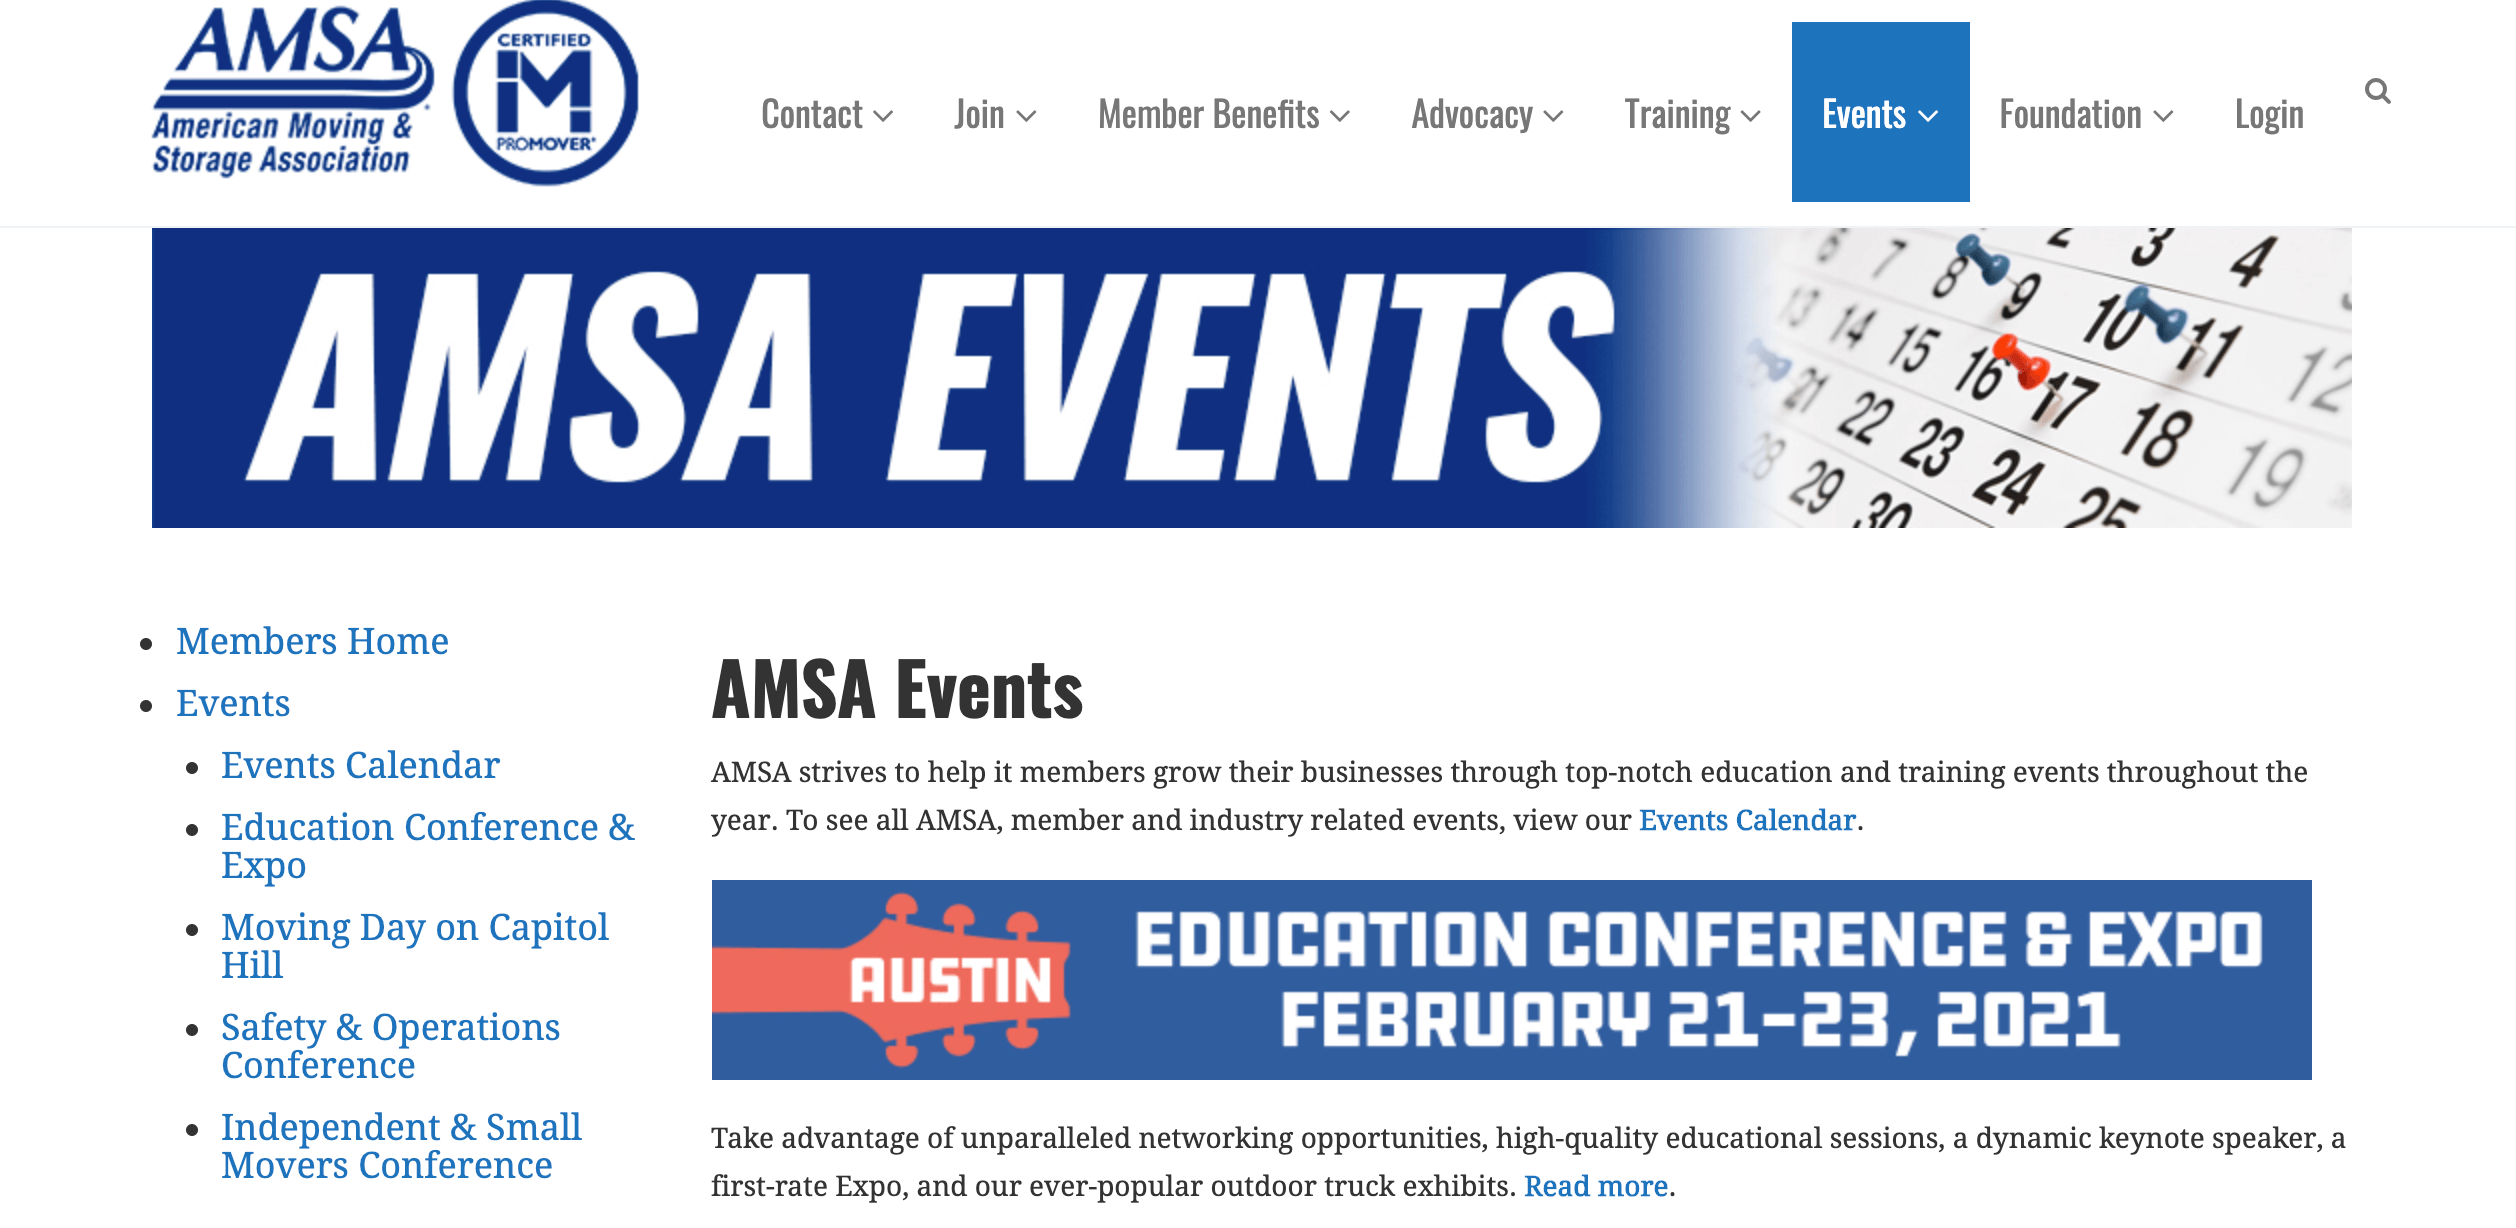 AMSA Events